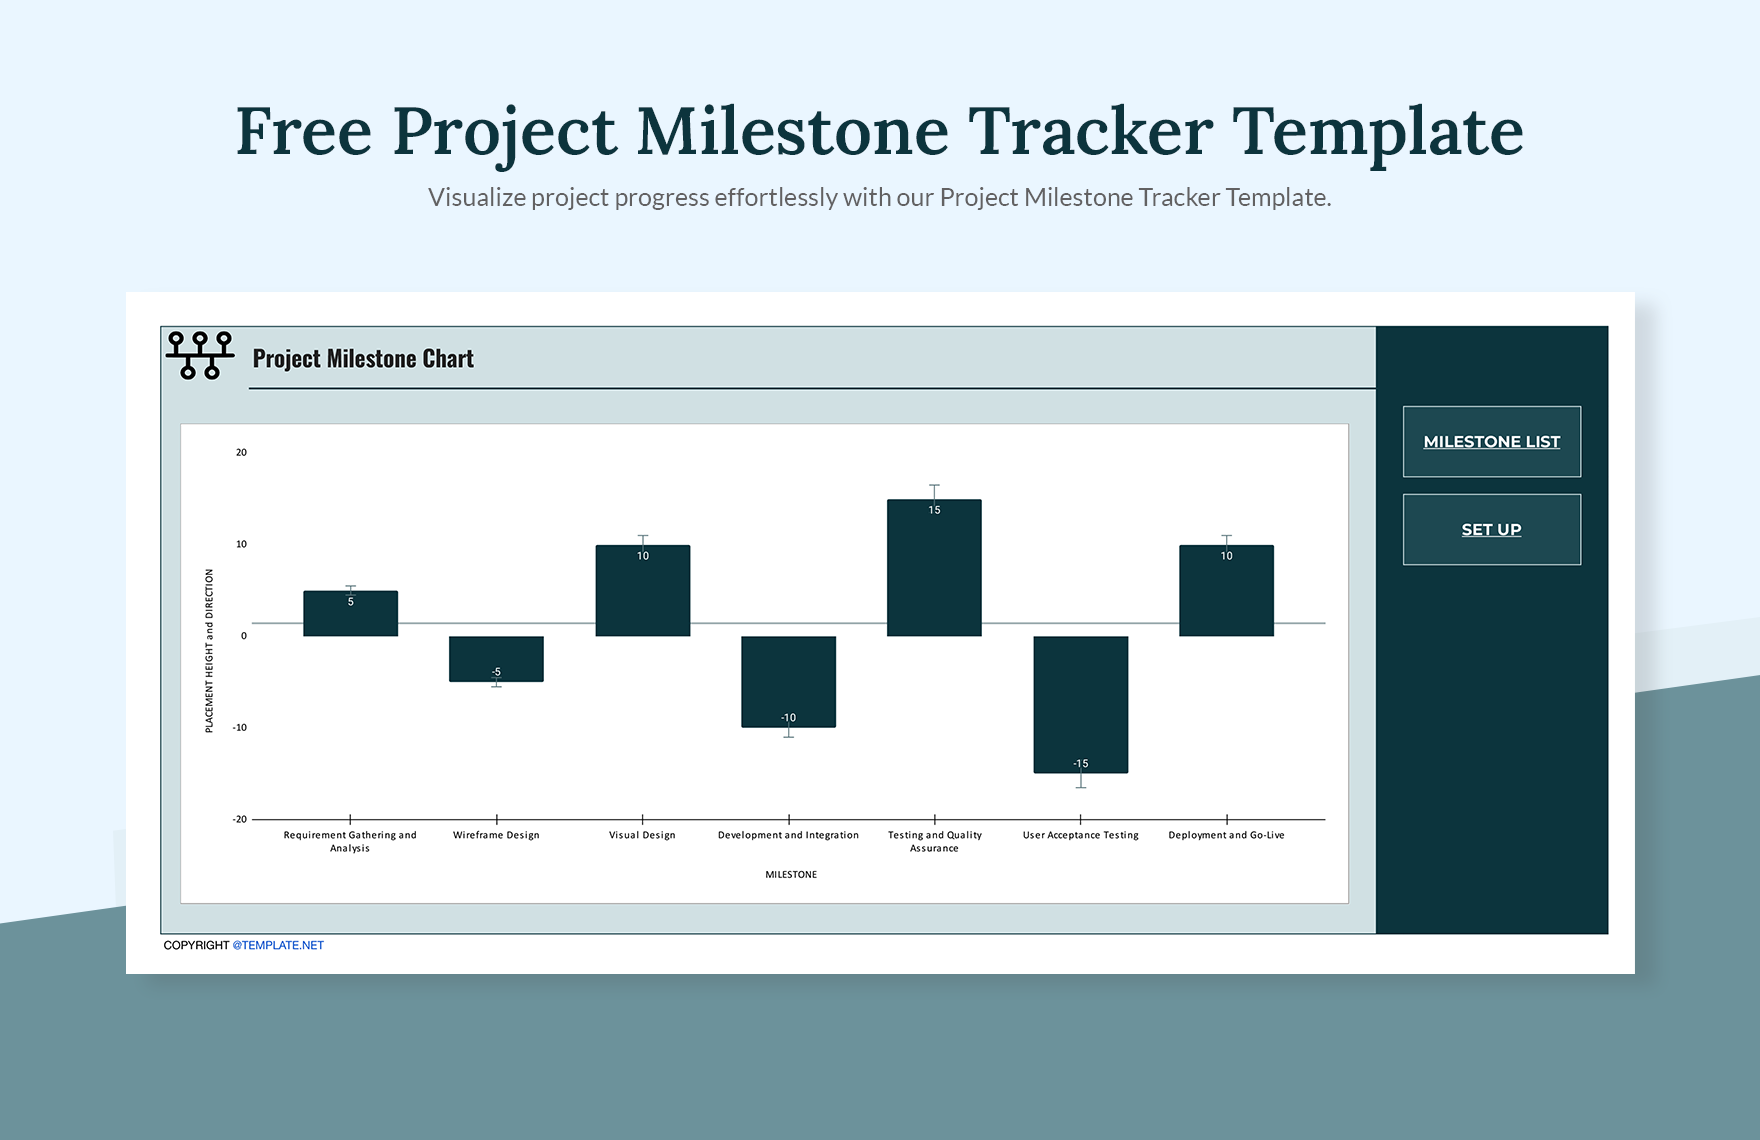 Free Project Milestone Tracker Template